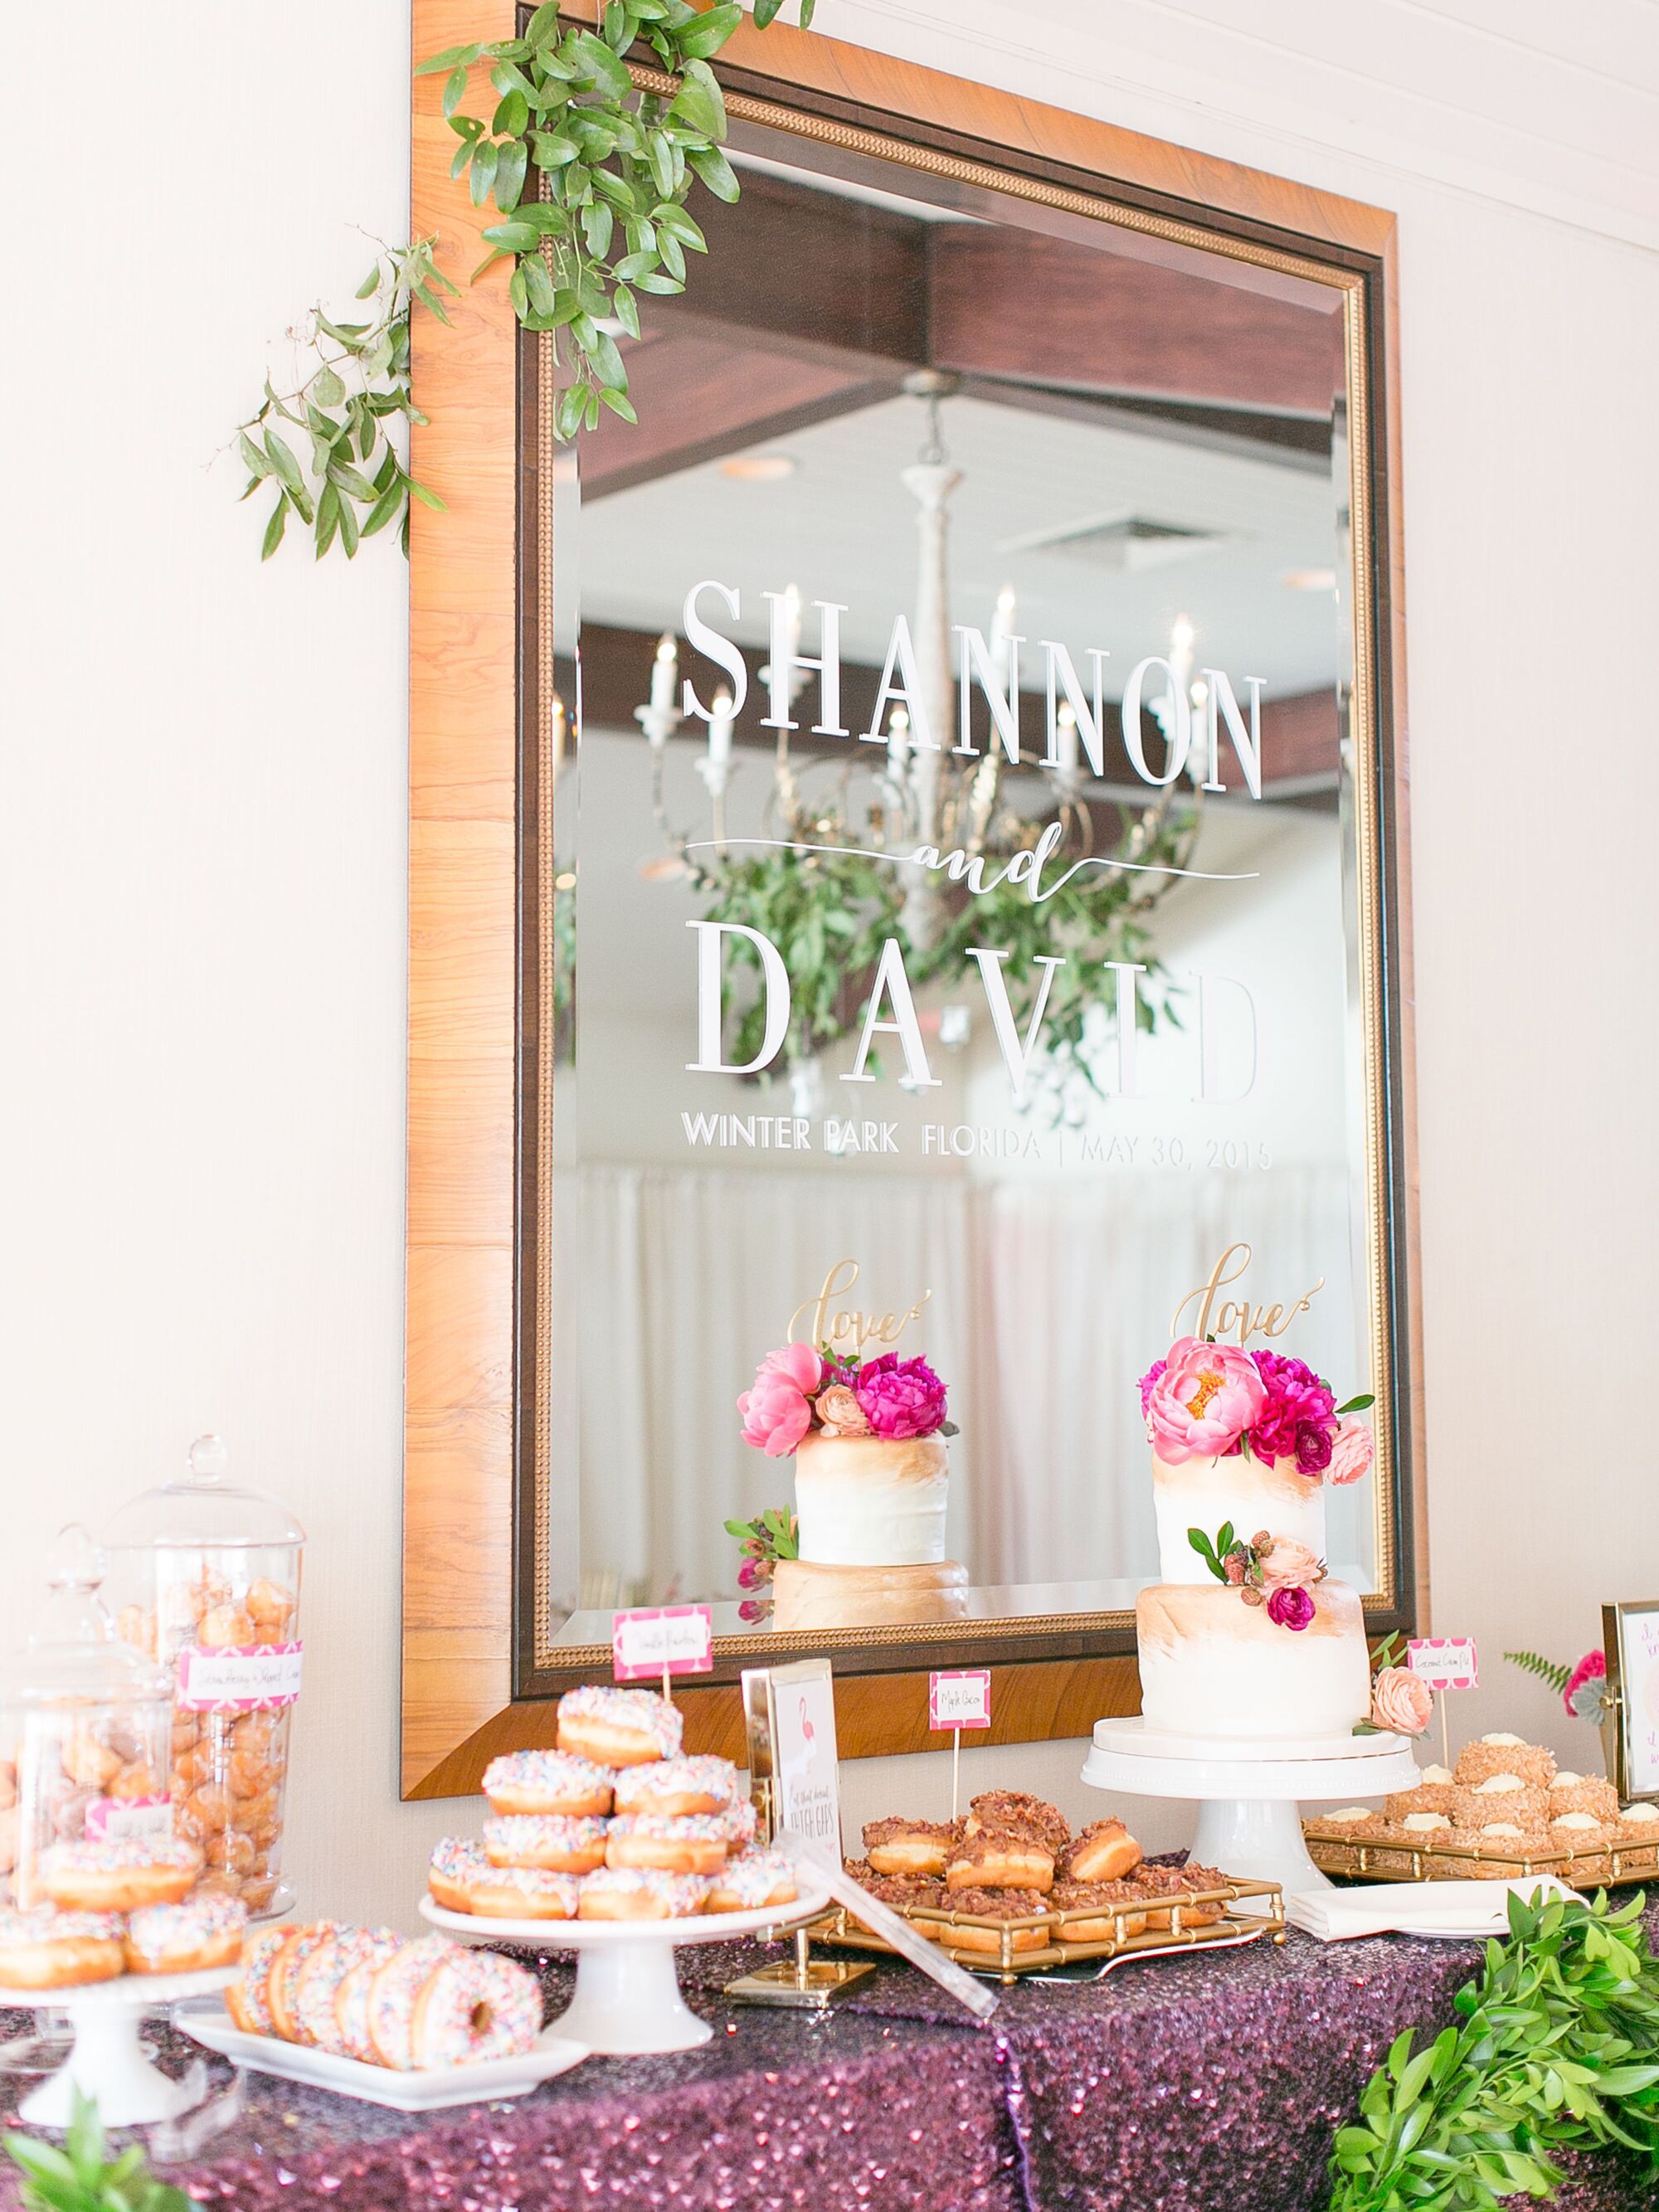 15 Wedding Dessert Tables For Your Wedding Reception